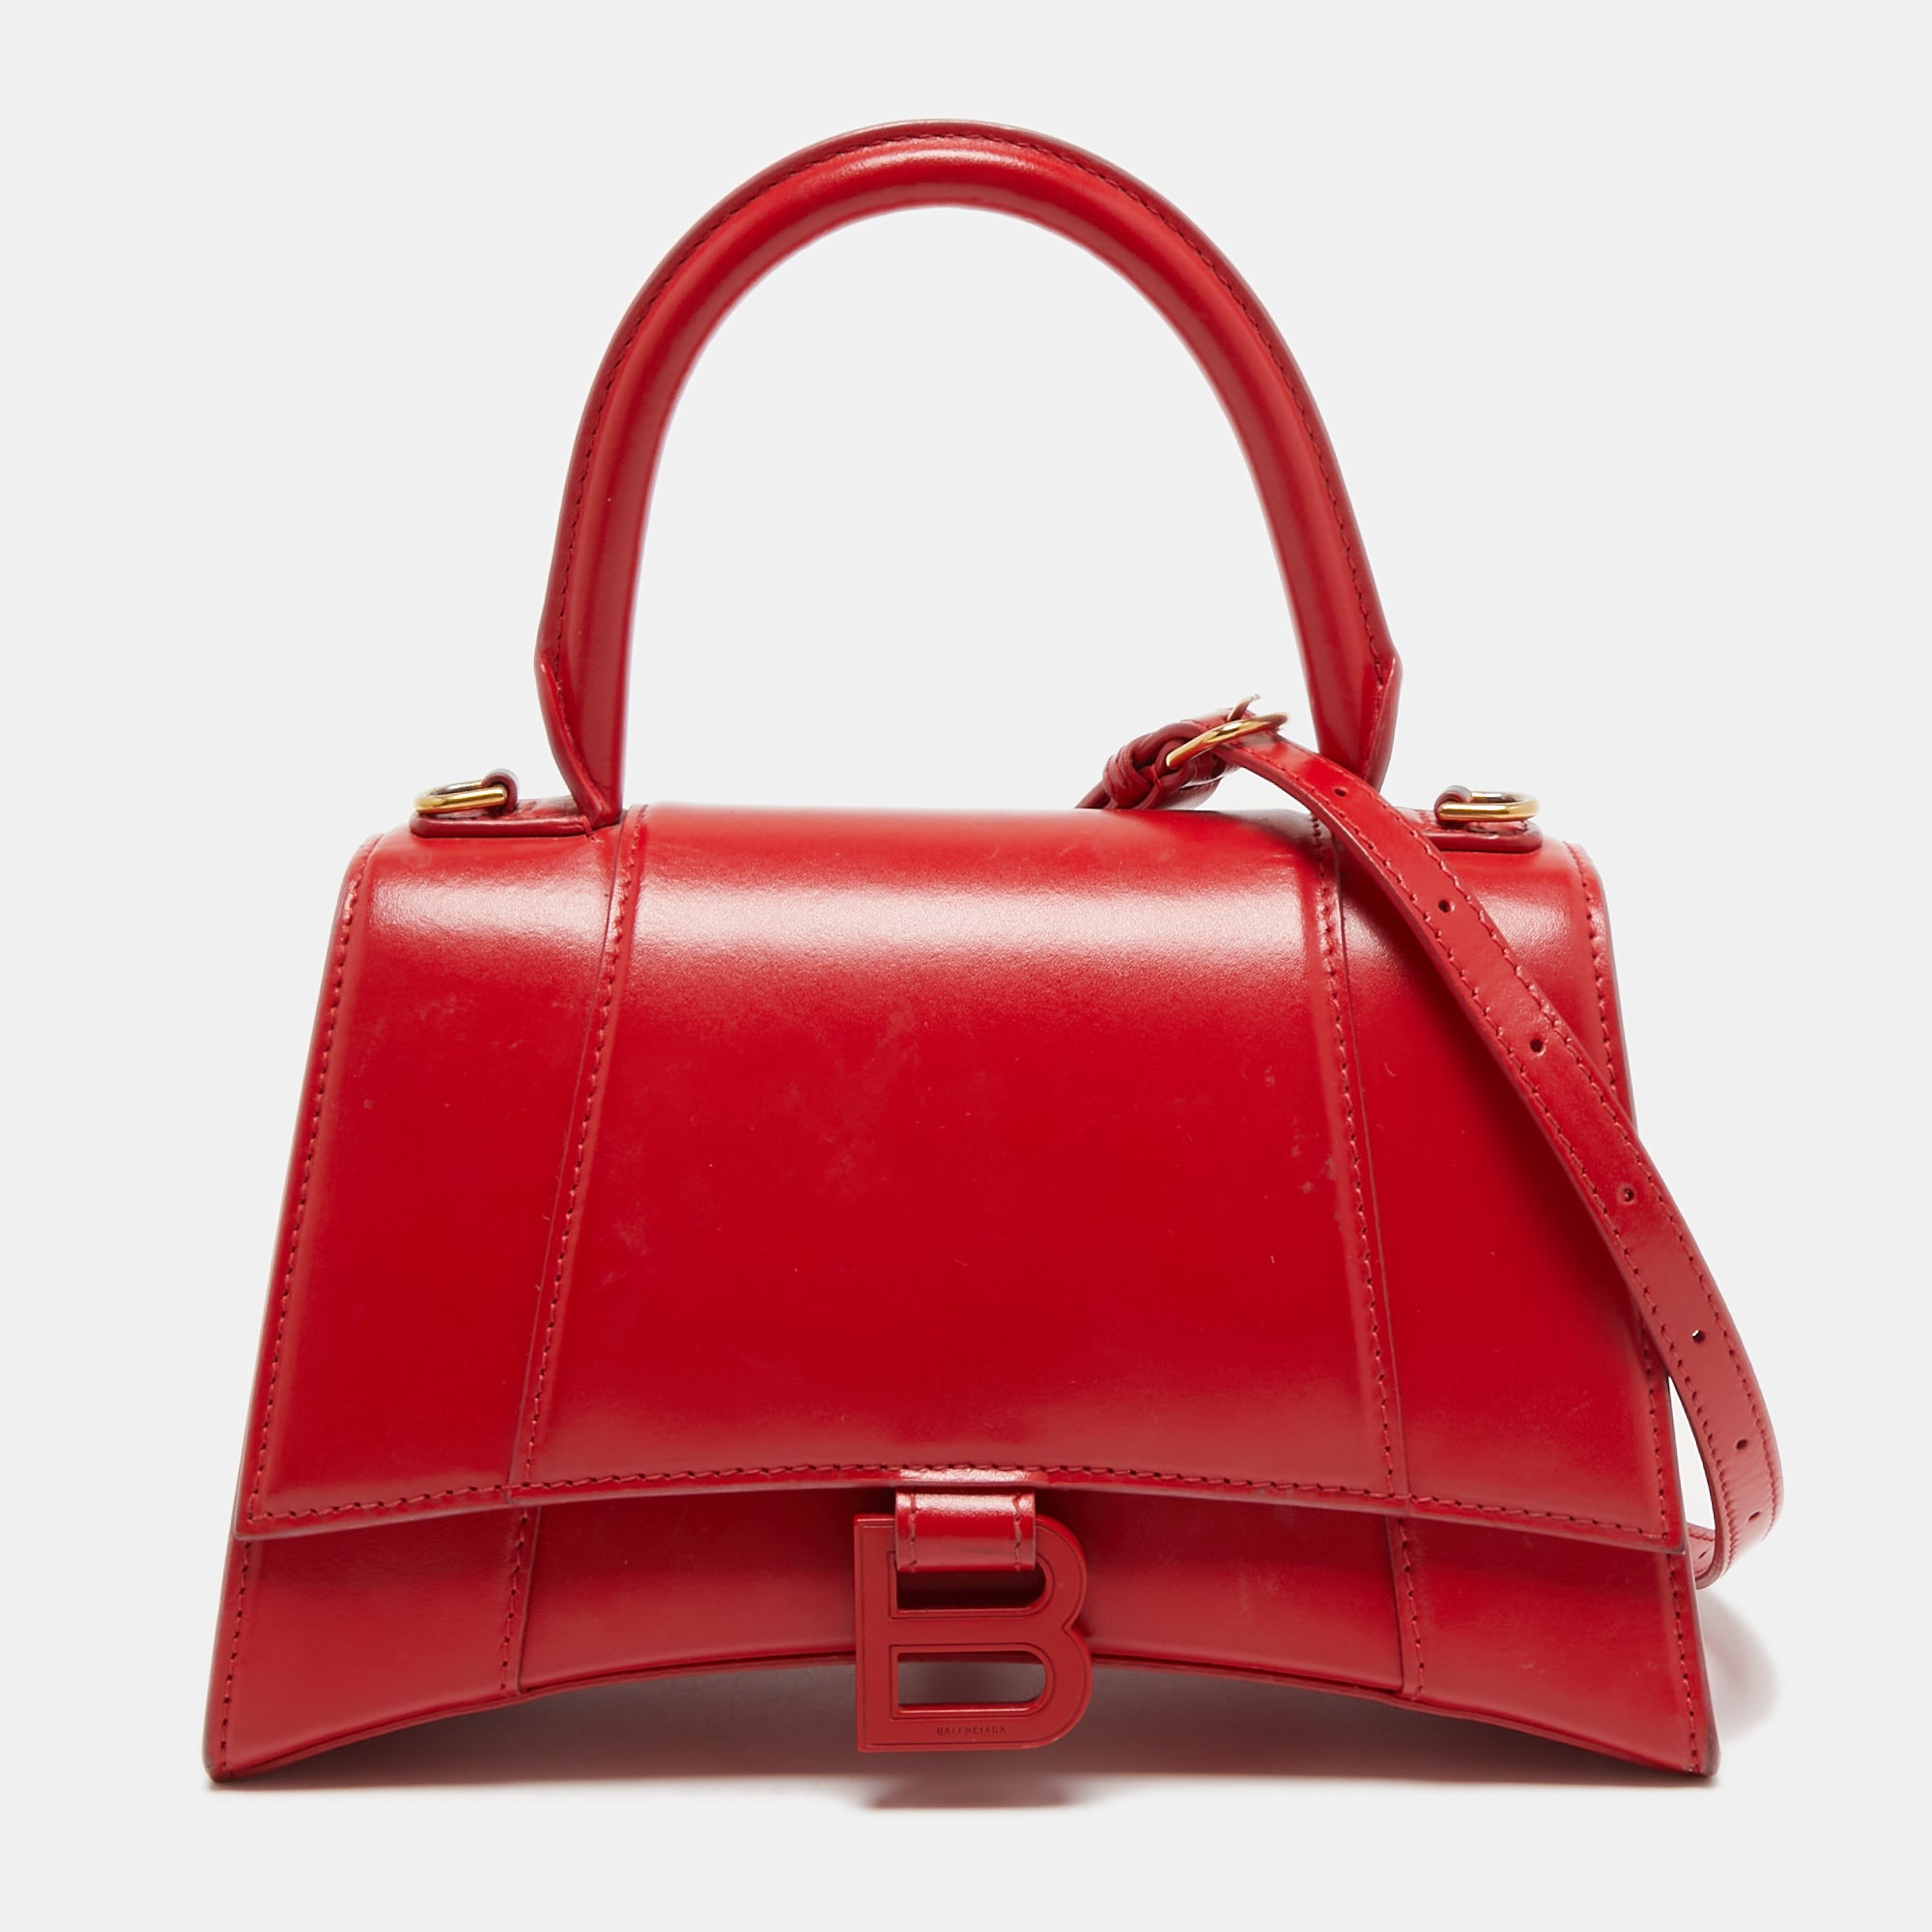 NWT 100% AUTH Balenciaga 115748 Red Leather Classic City Bag | eBay